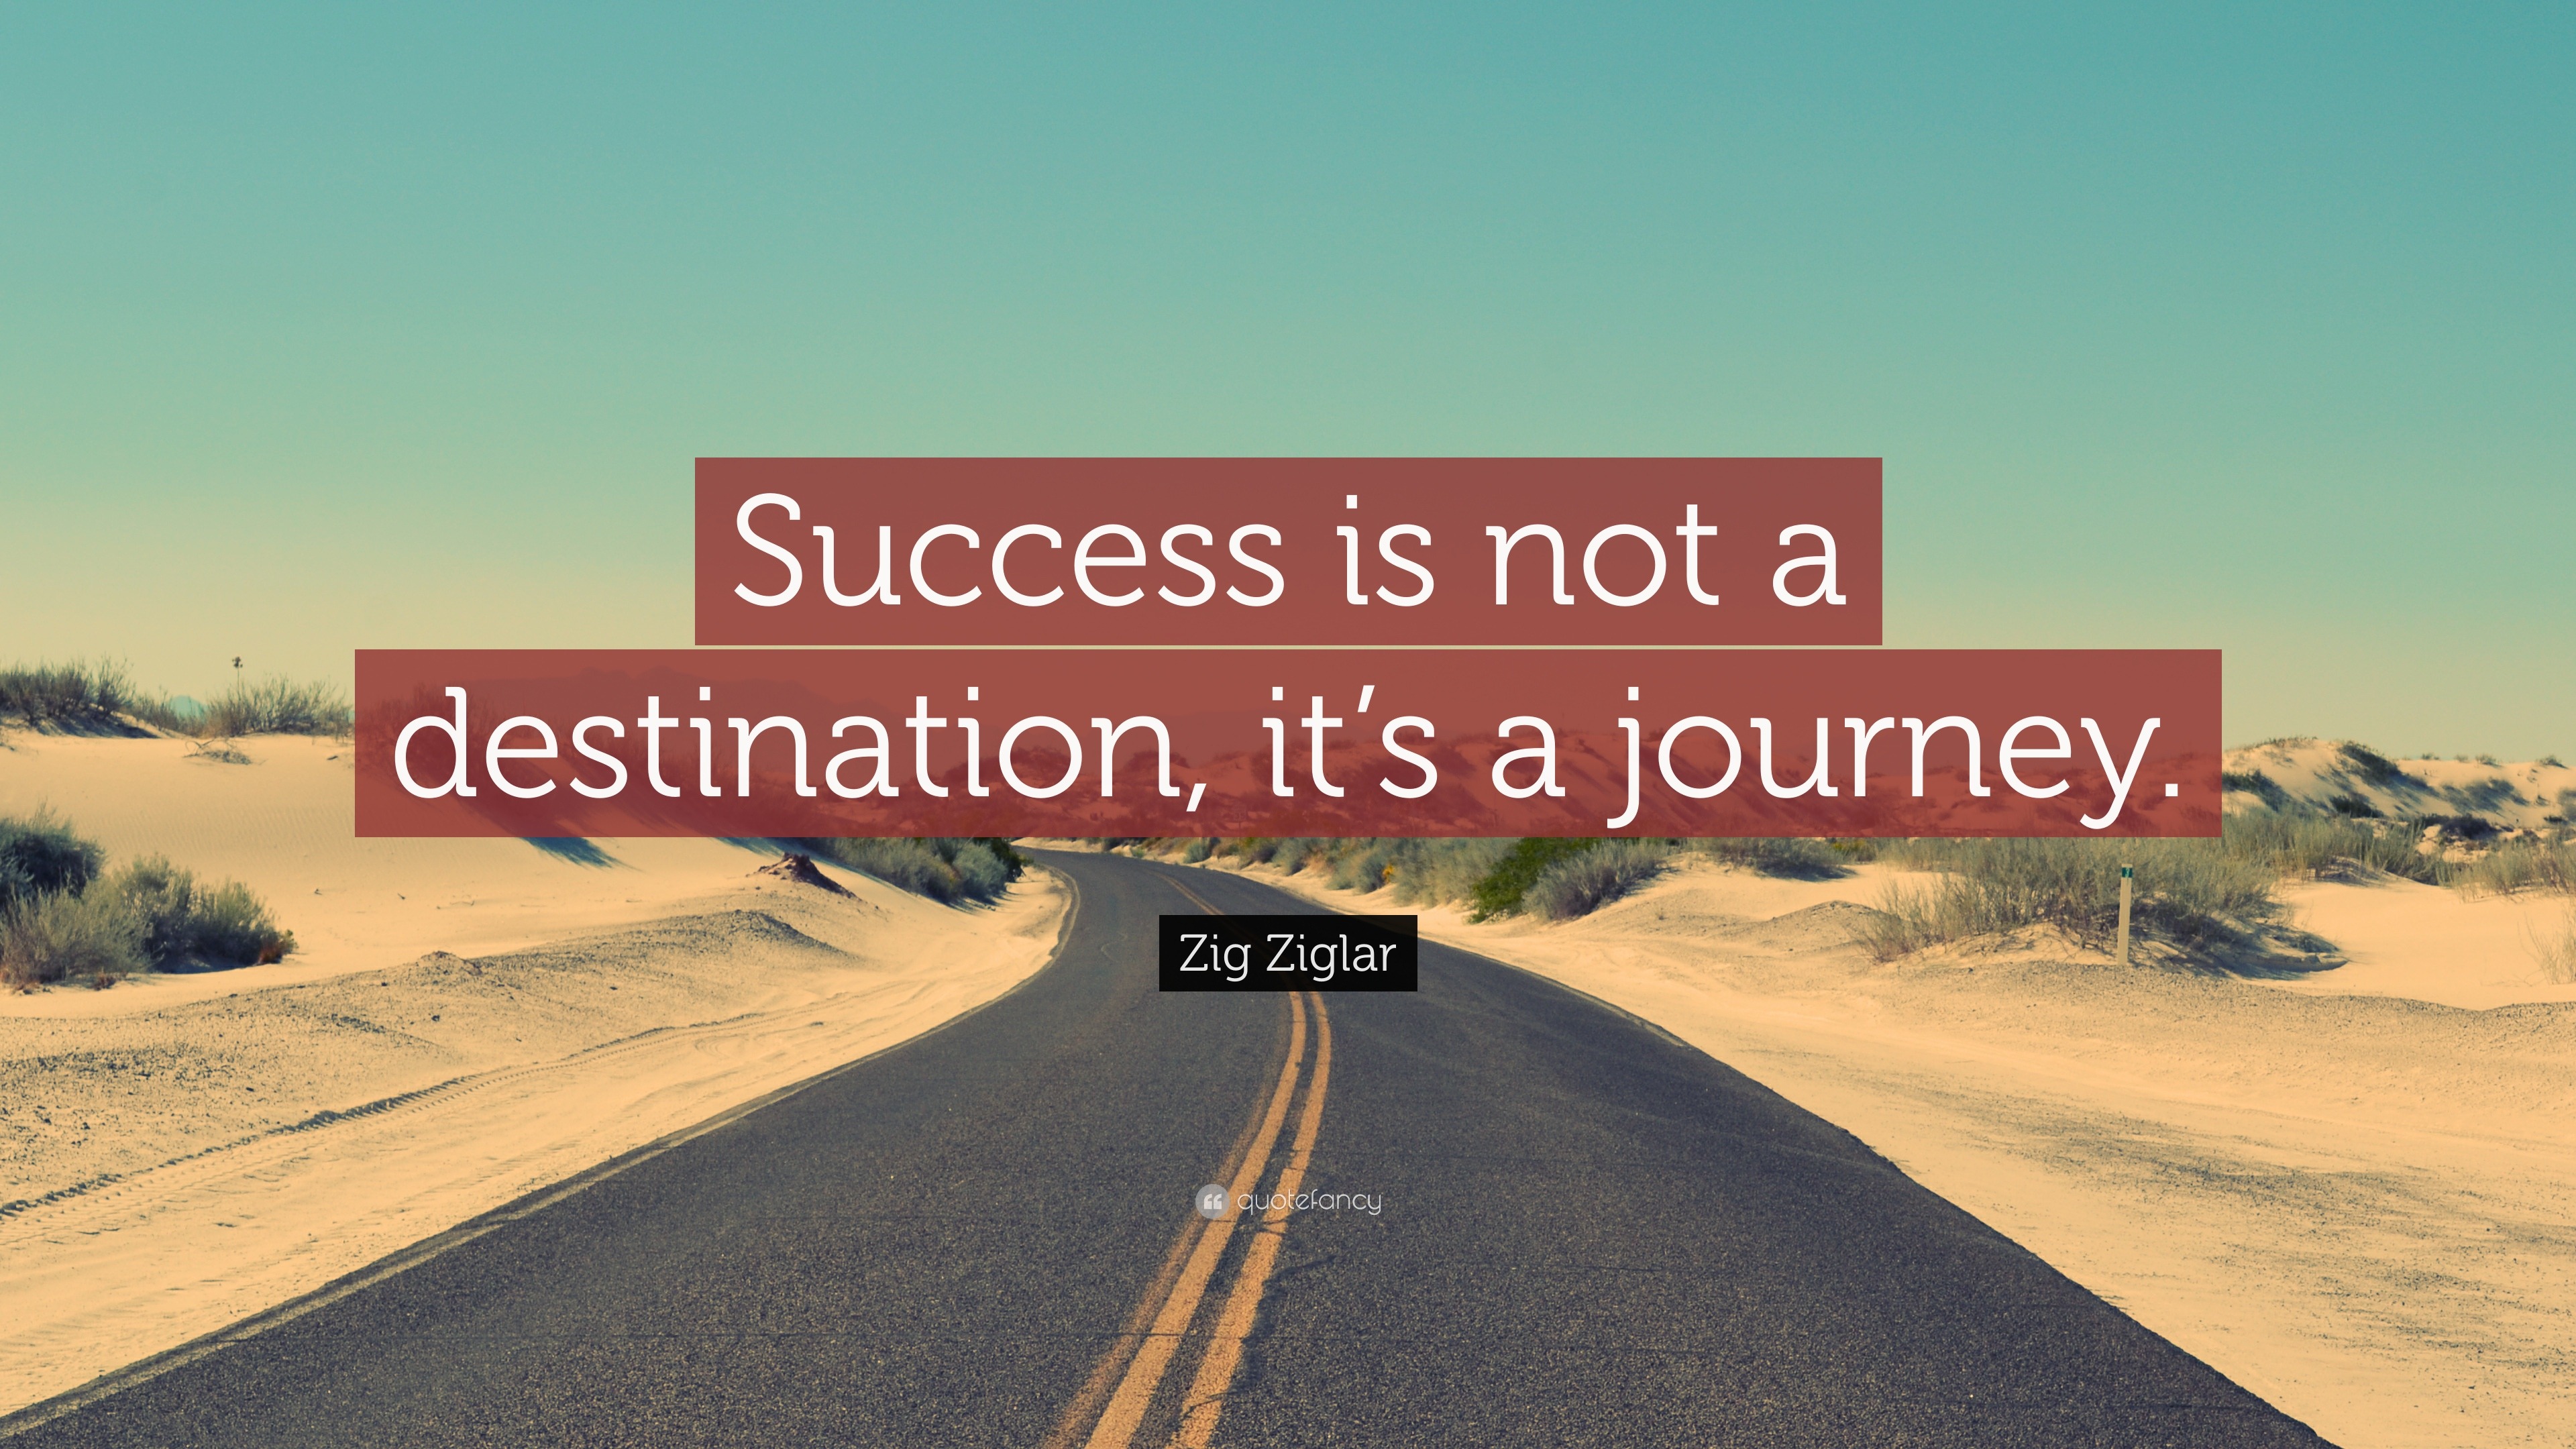 Zig Ziglar Quote “Success is not a destination, it’s a